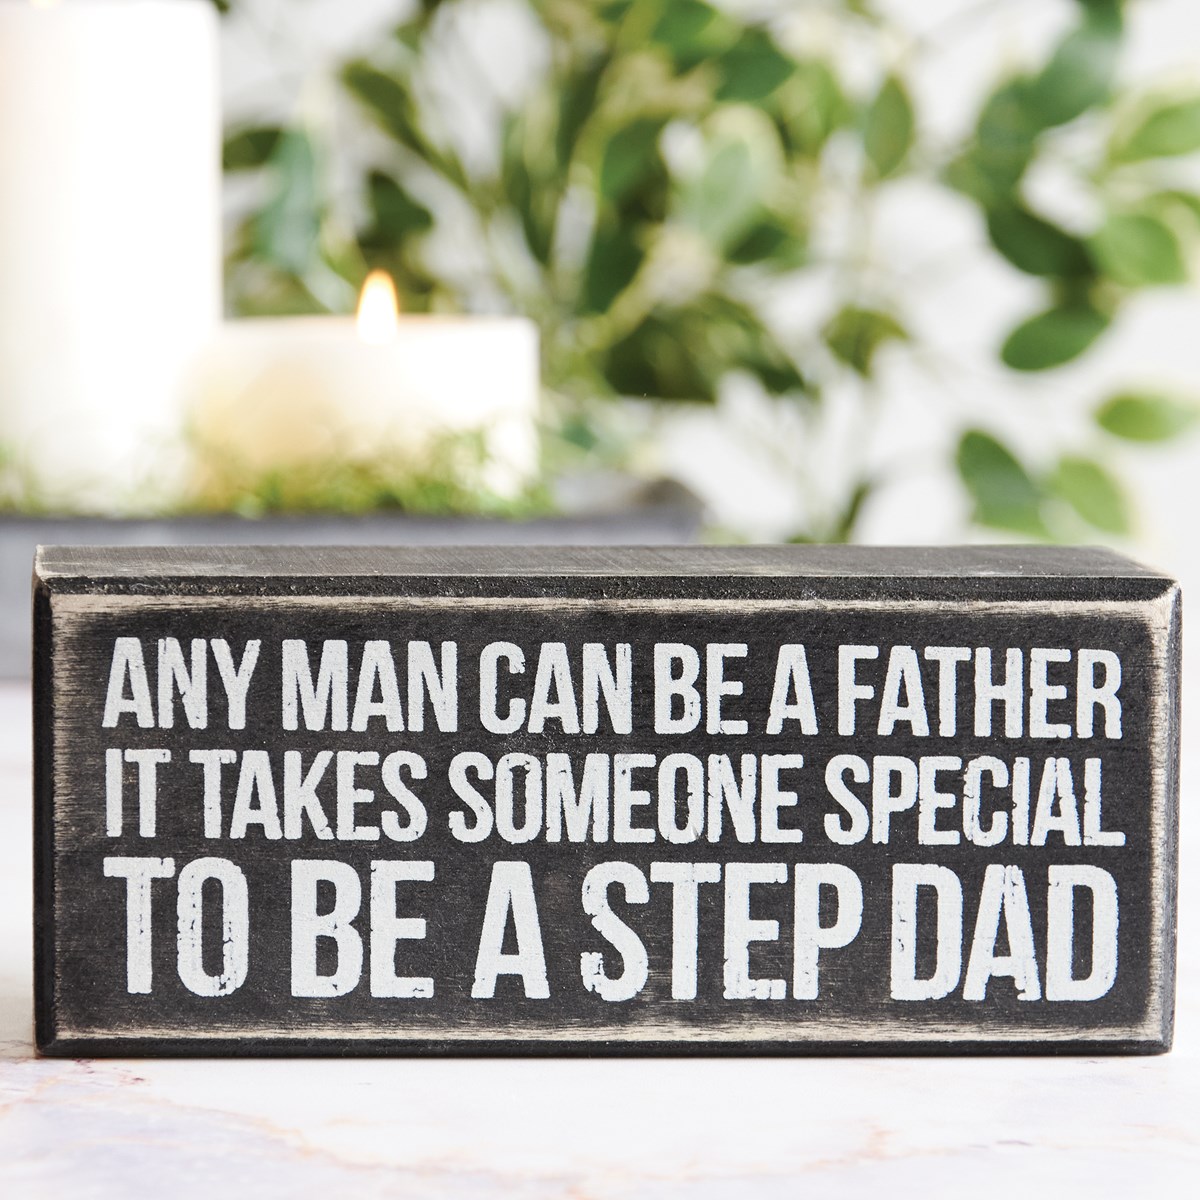 Step Dad Box Sign - Wood